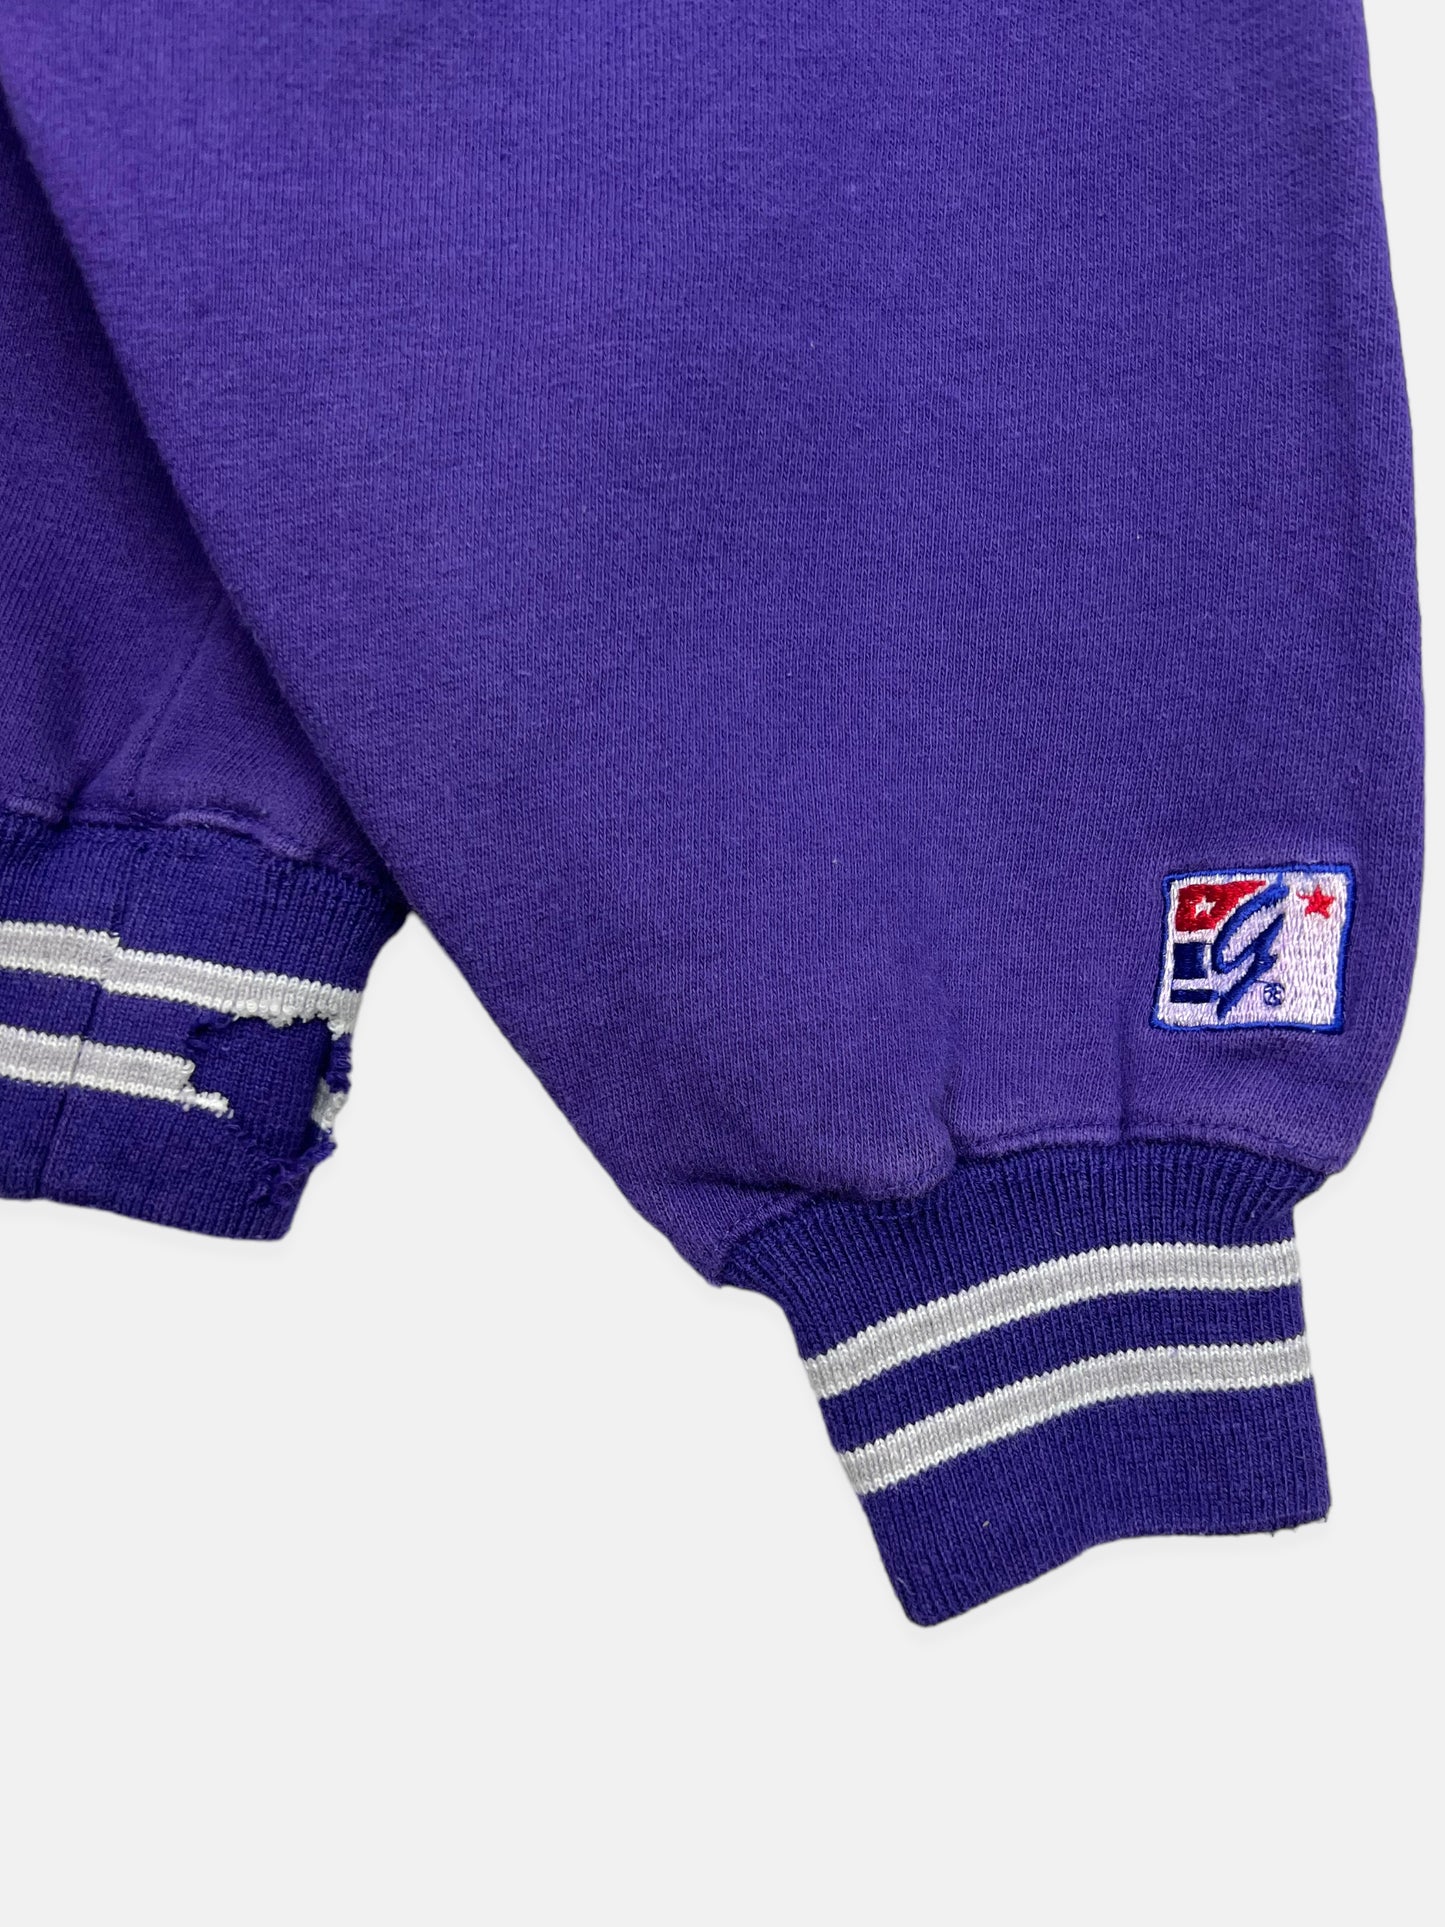 90's Washington Huskies USA Made Embroidered Vintage Sweatshirt Size 10